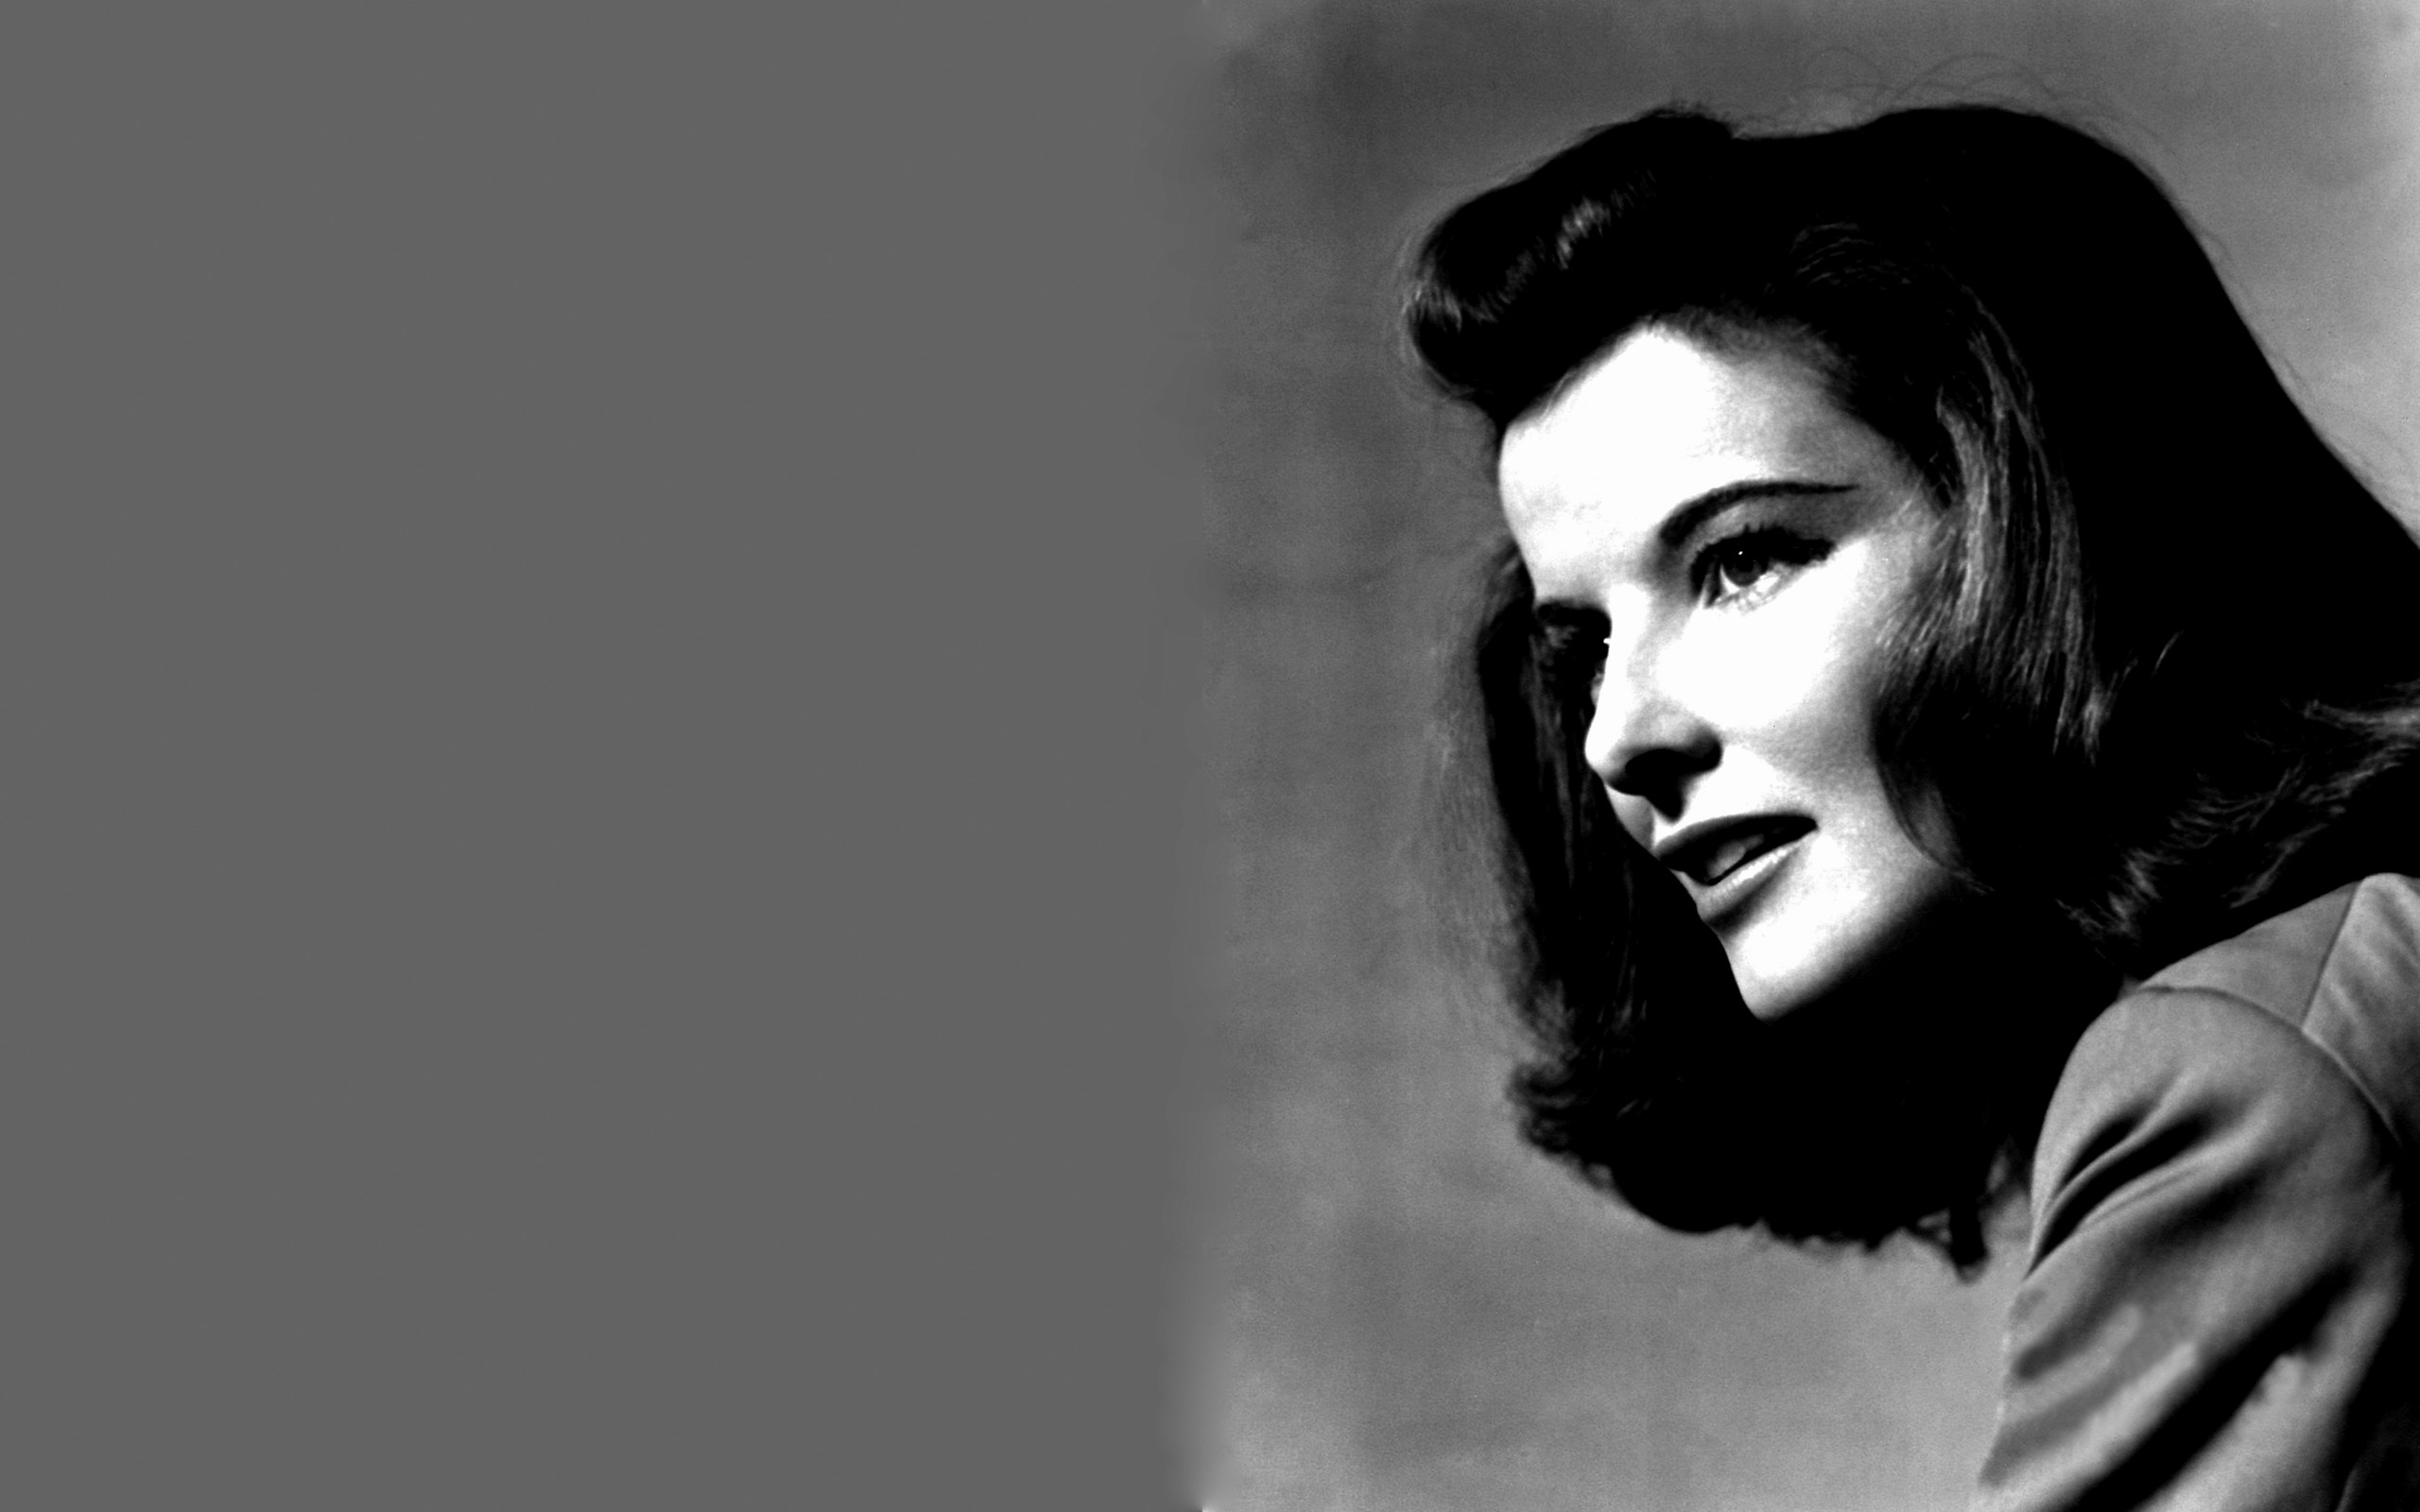 Classic Actresses Image Katharine Hepburn HD Wallpaper And